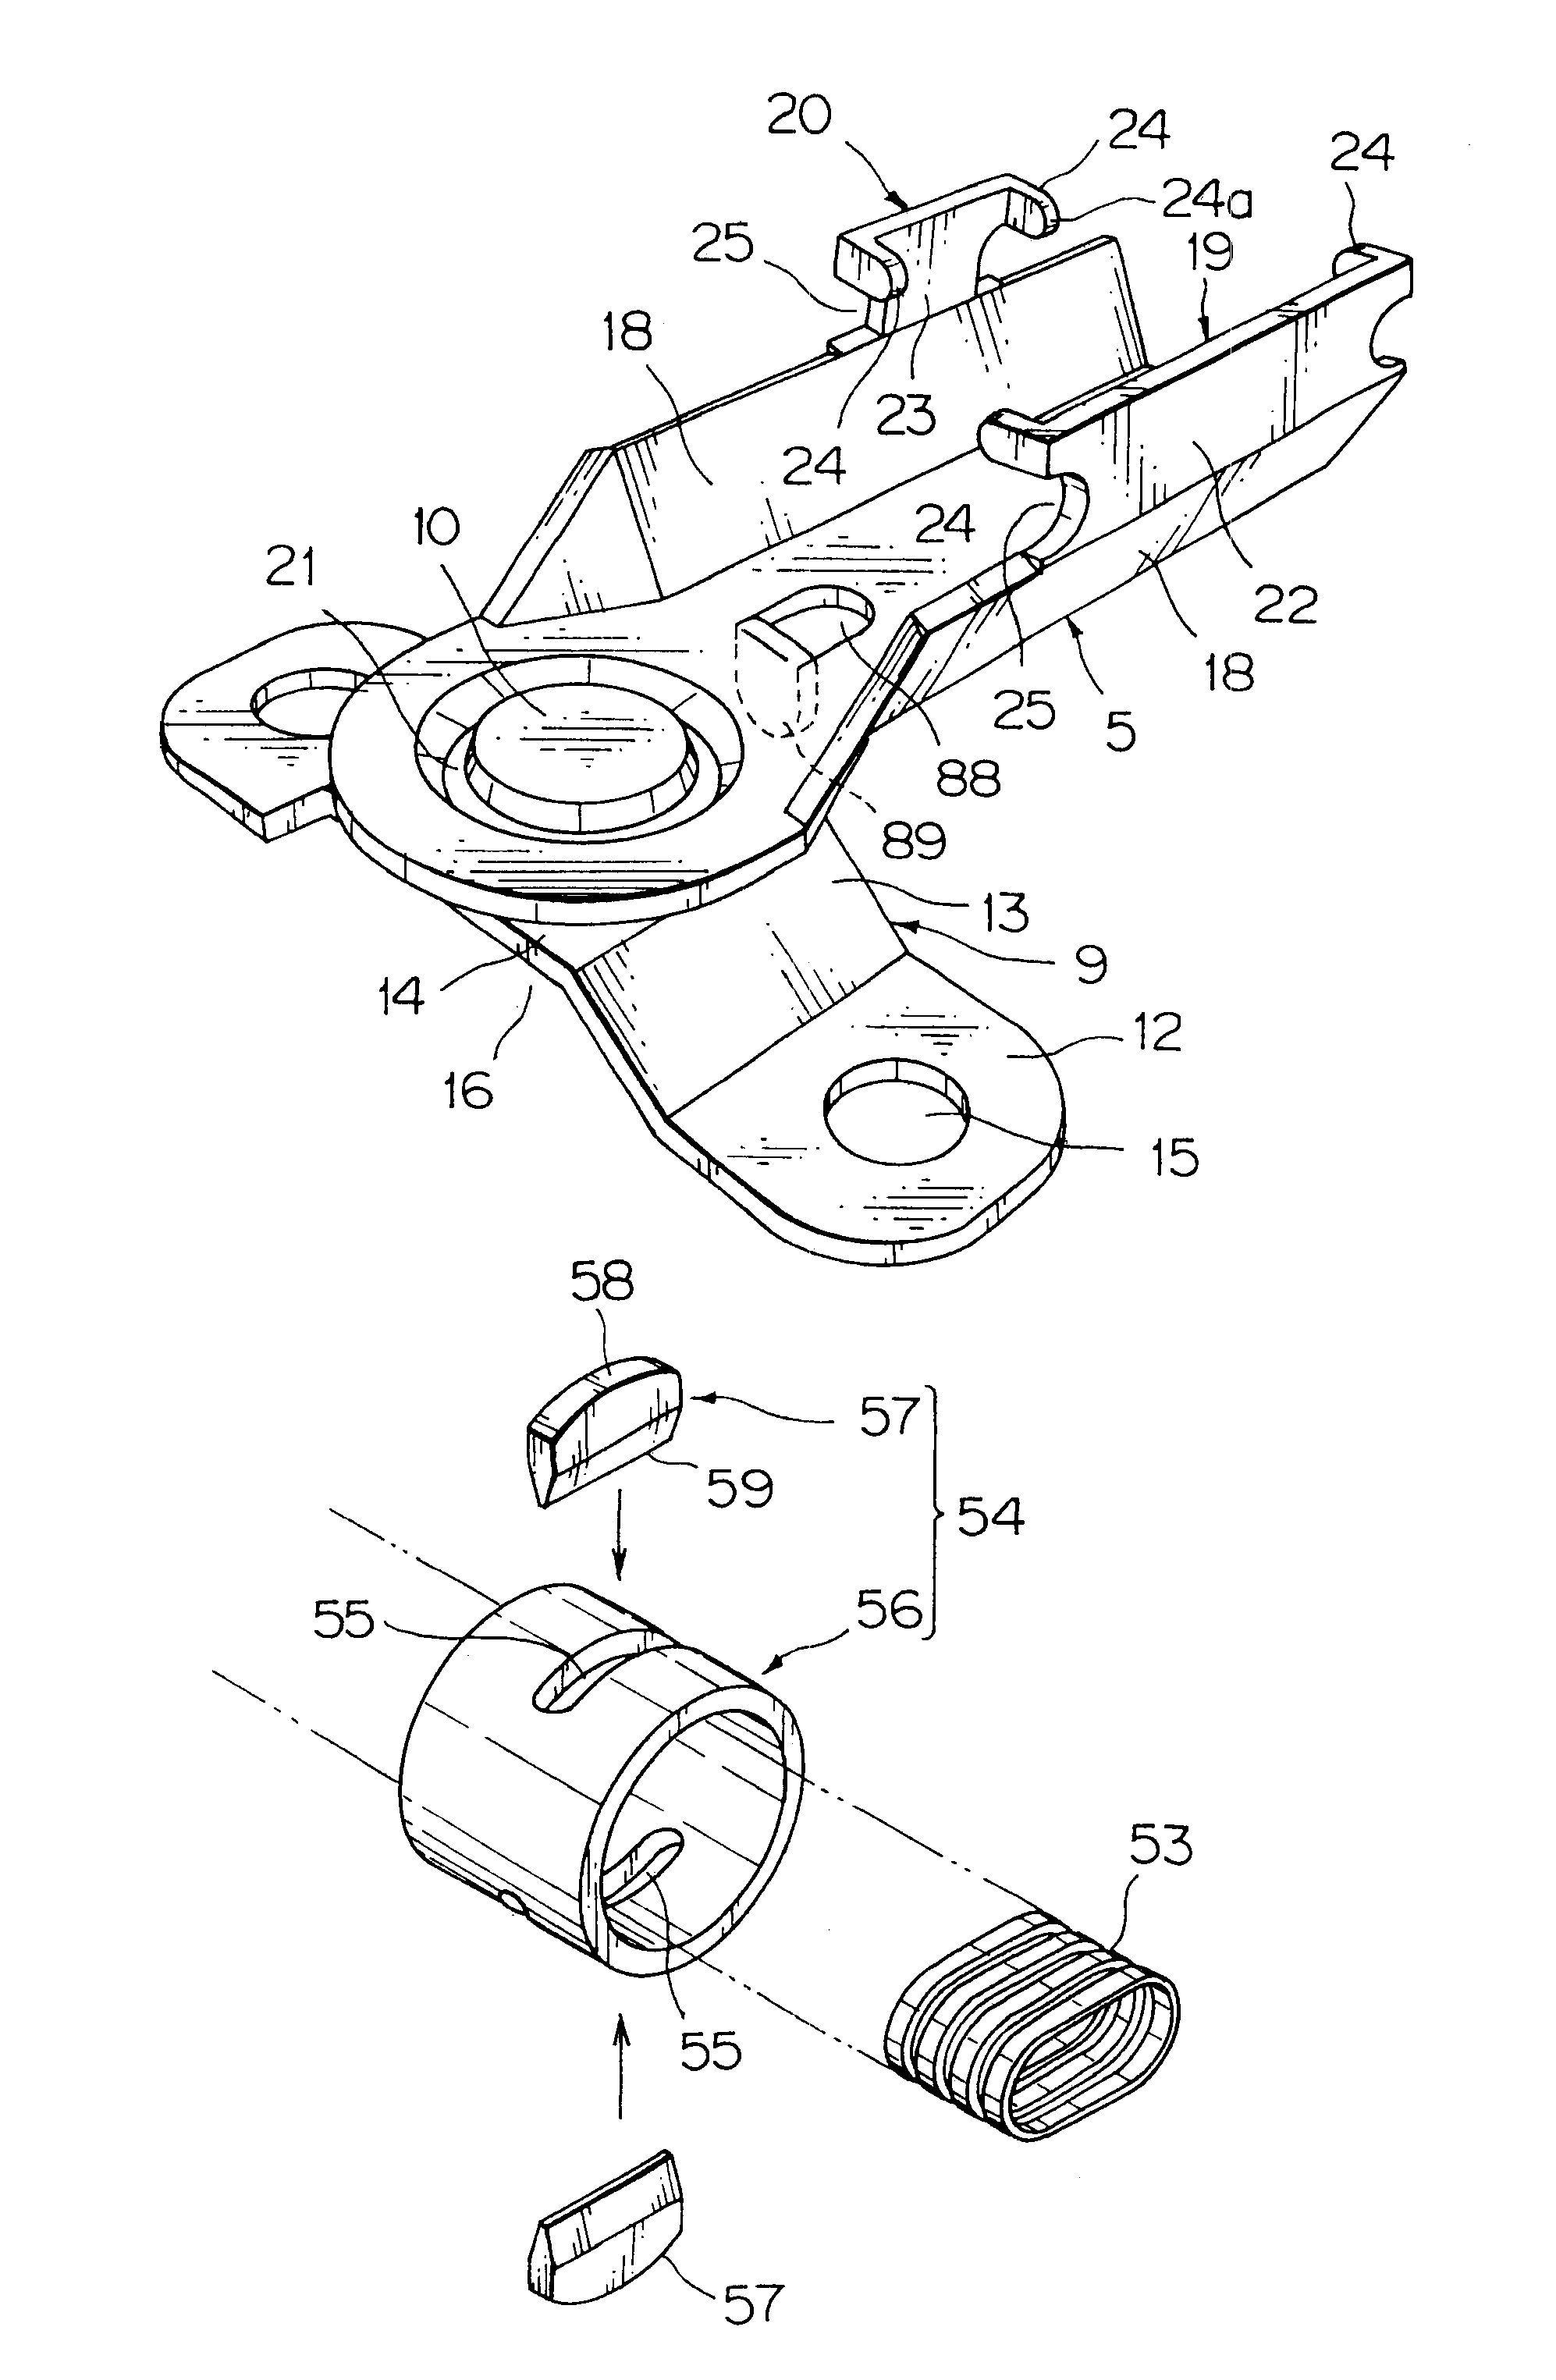 Wiring harness arrangement assembly for sliding door of car